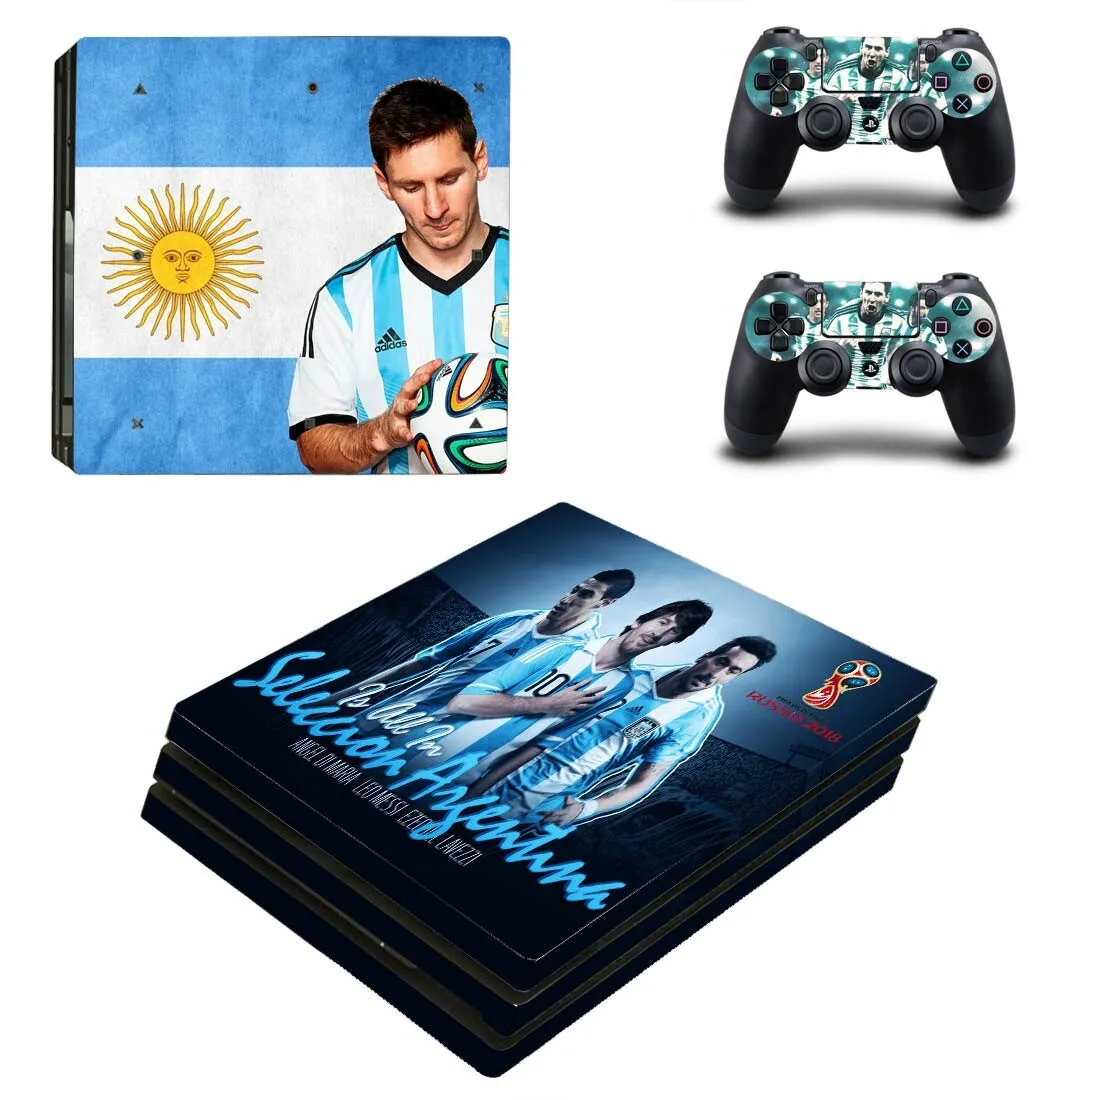 PS4 Pro Lionel Messi sticker s PS 4 Play station 4 Pro стикер для кожи Pegatinas для playstation 4 Pro консоль и контроллер